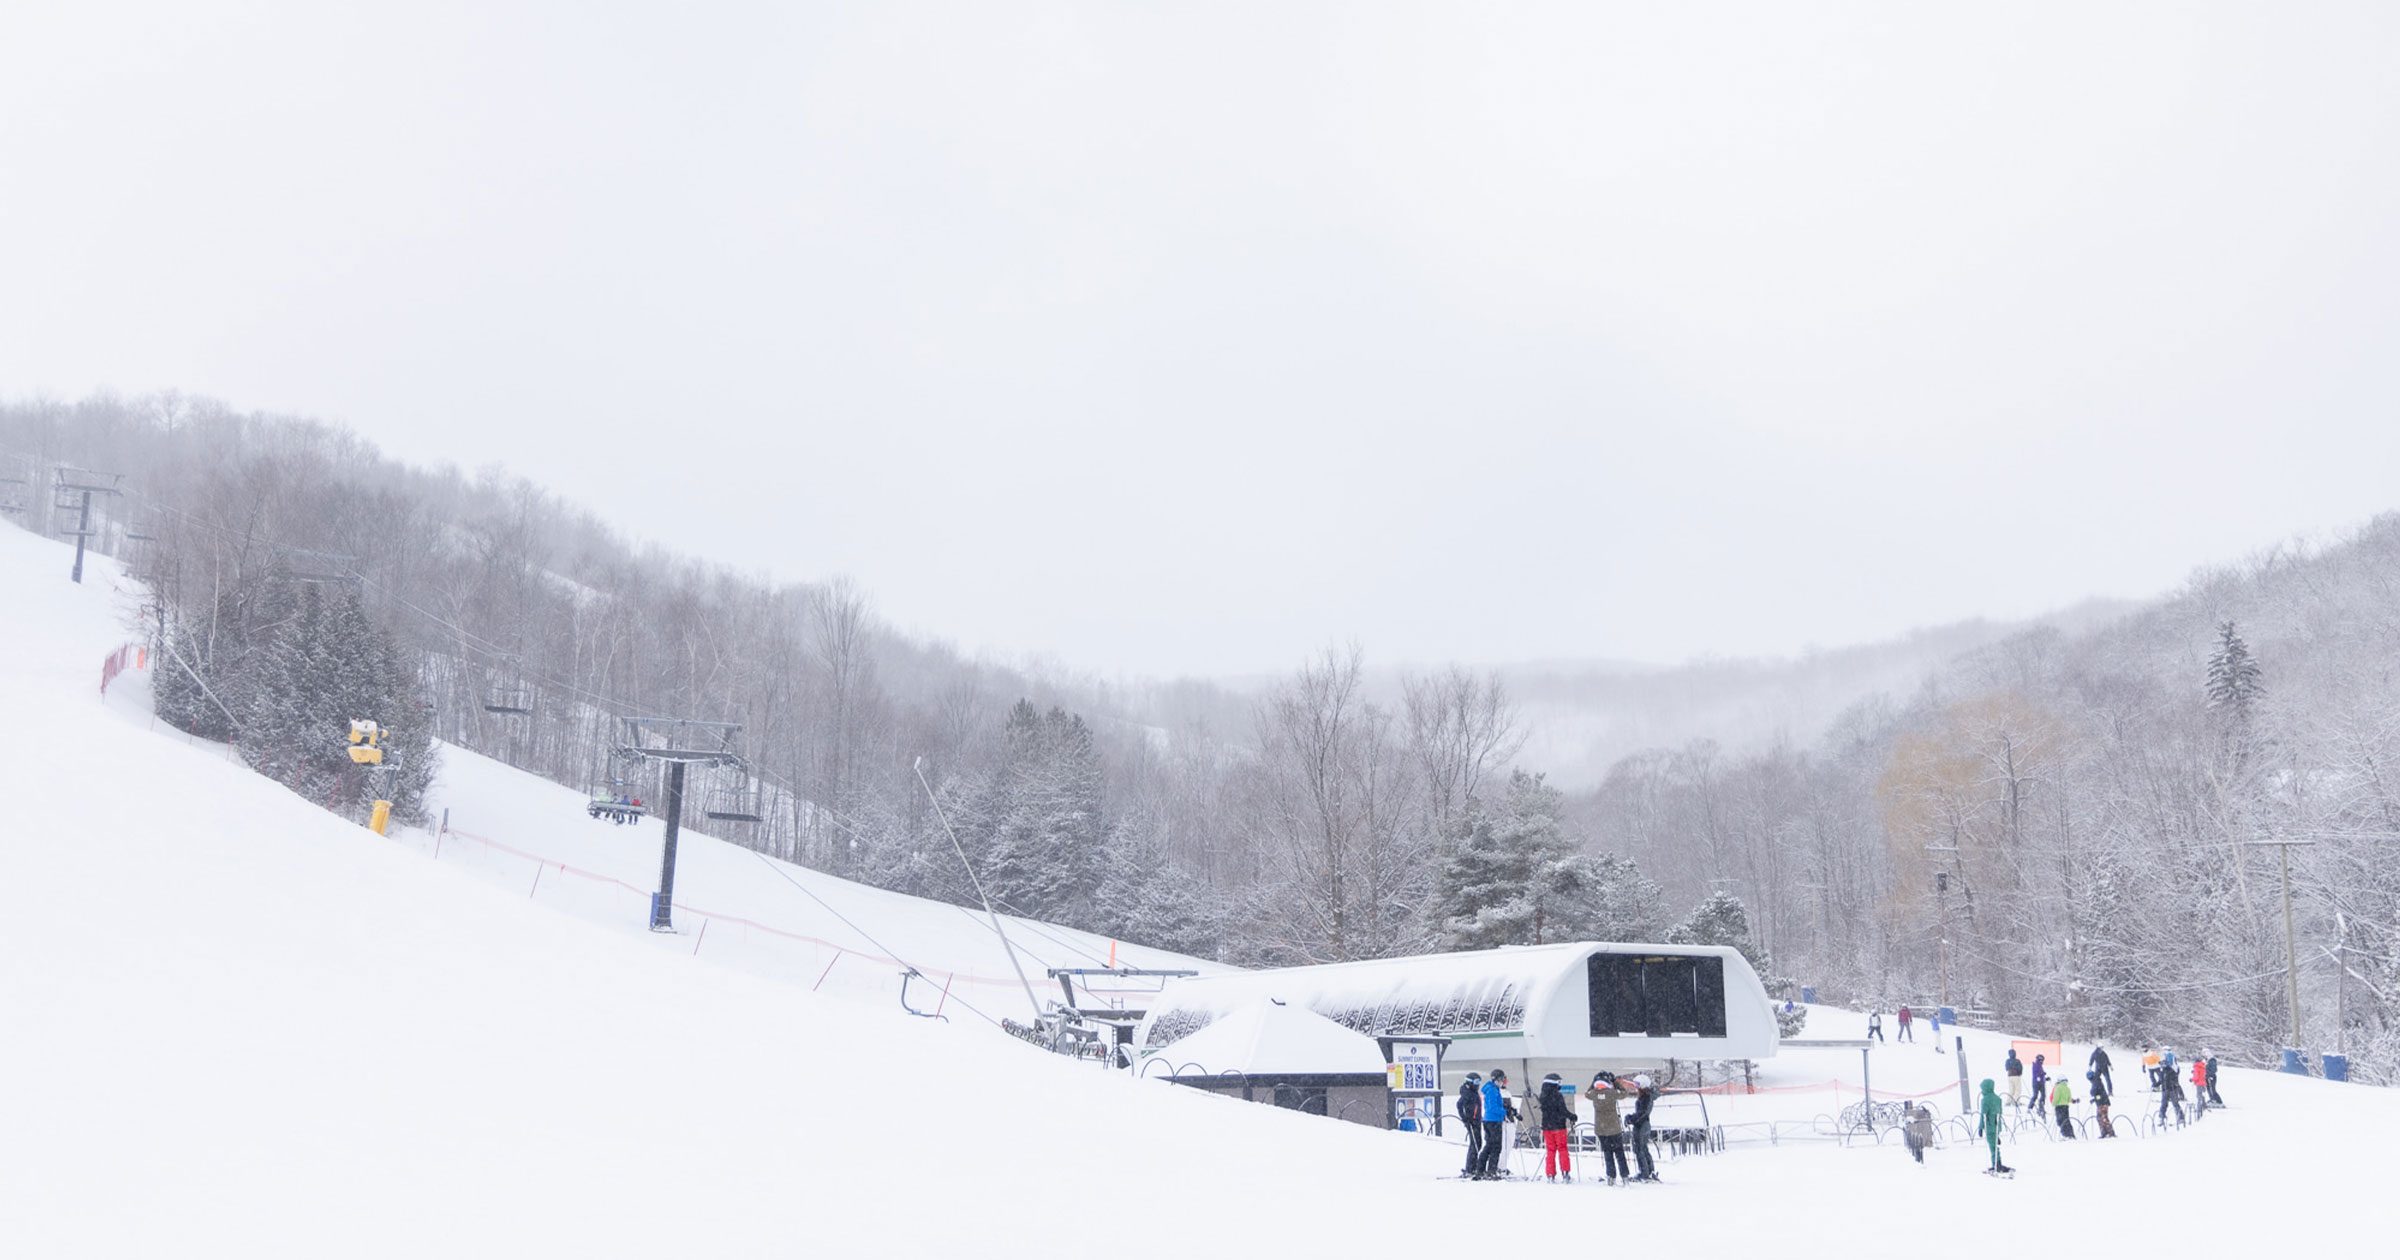 snowy-scene-looking-towards-summit-chair